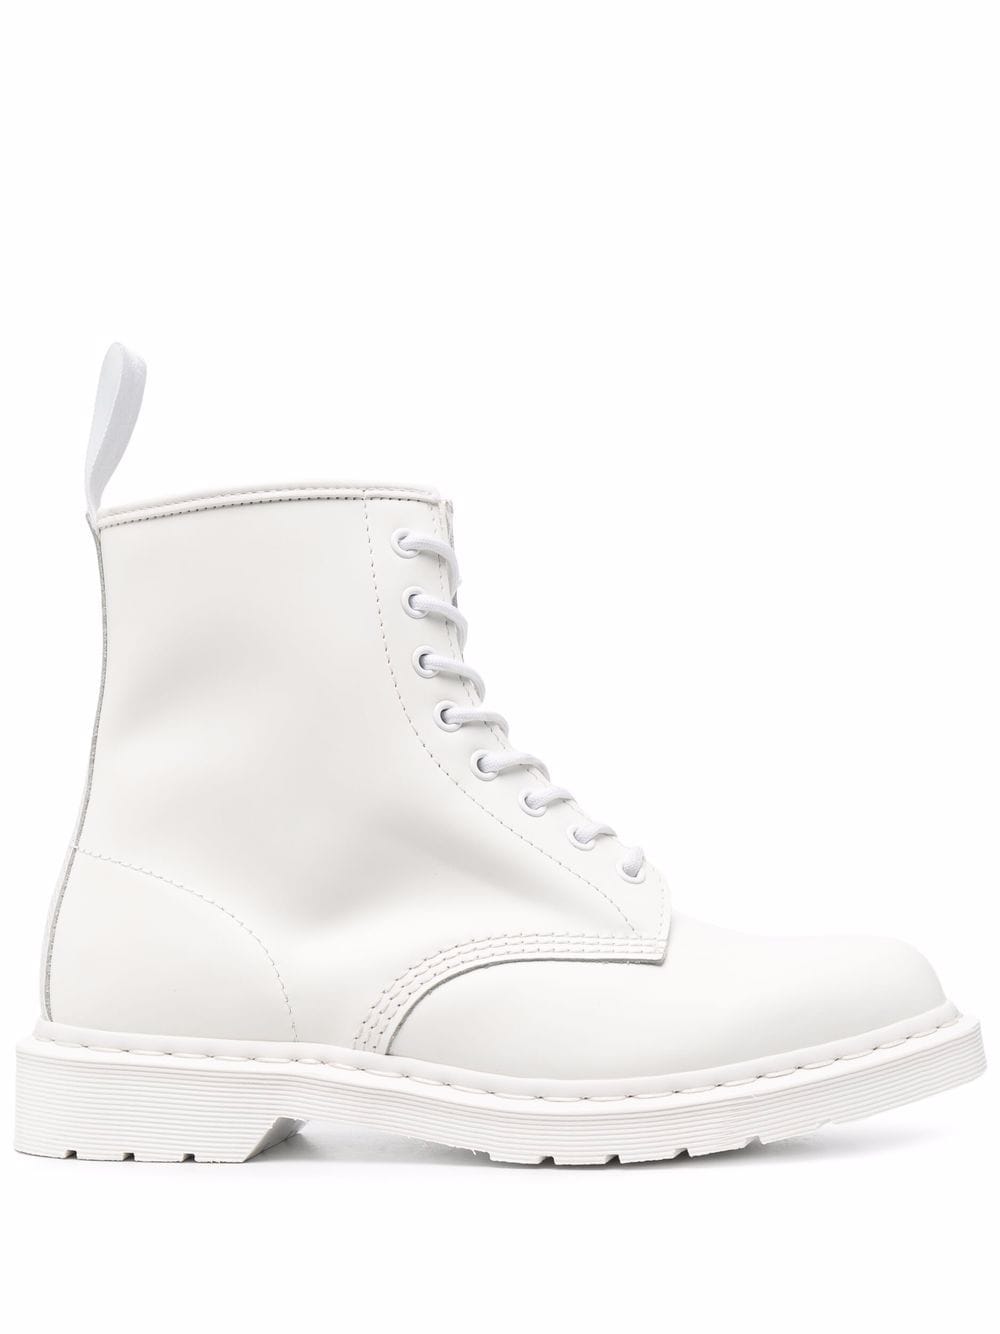 Dr. Martens 1460 Mono leather boots - White von Dr. Martens